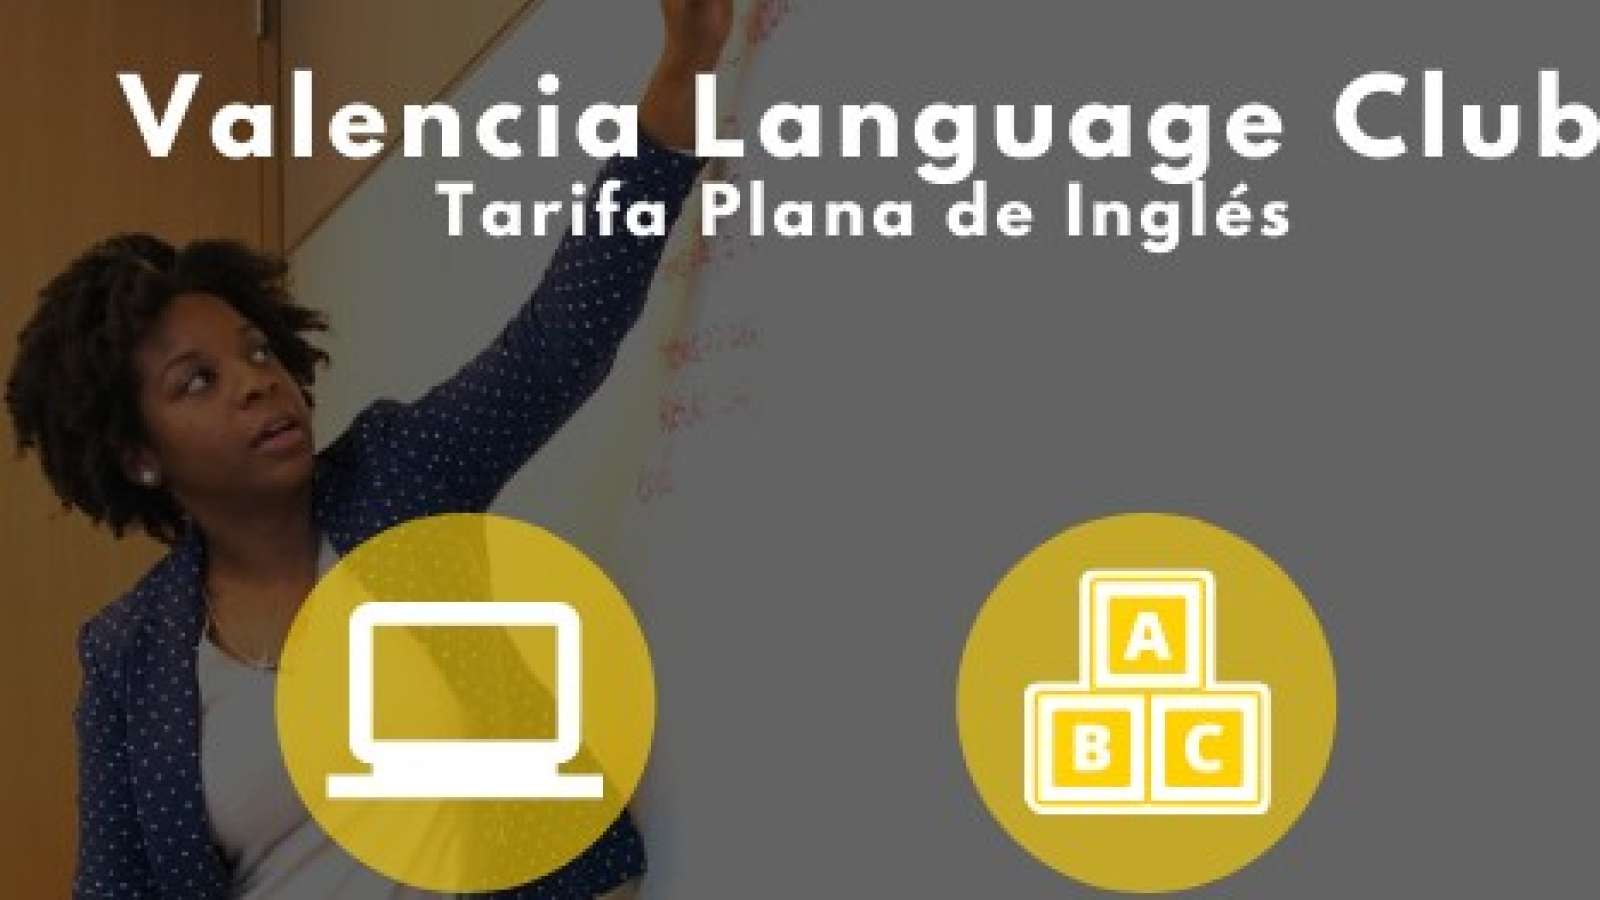 Your Language Club Valencia